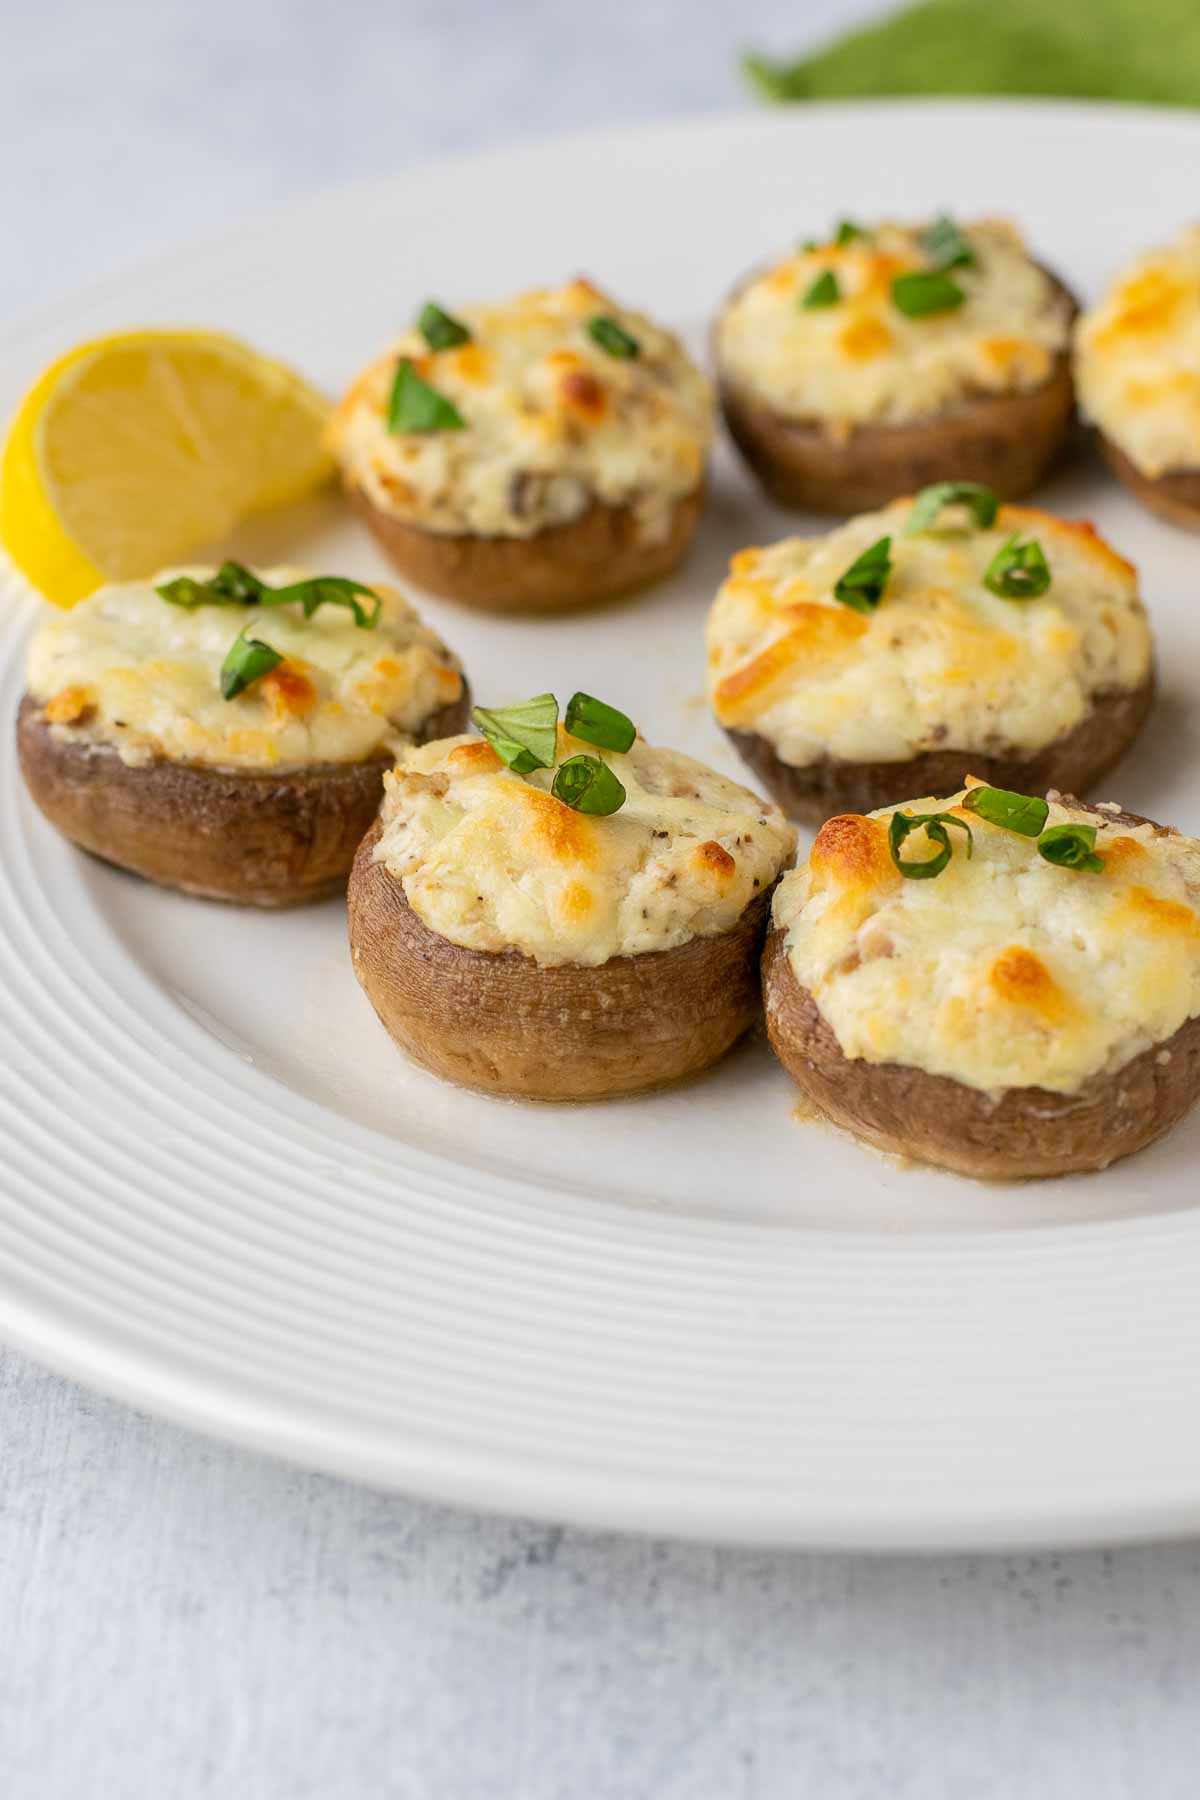 stuffed mushrooms with cream cheese on plate with lemon, basil.